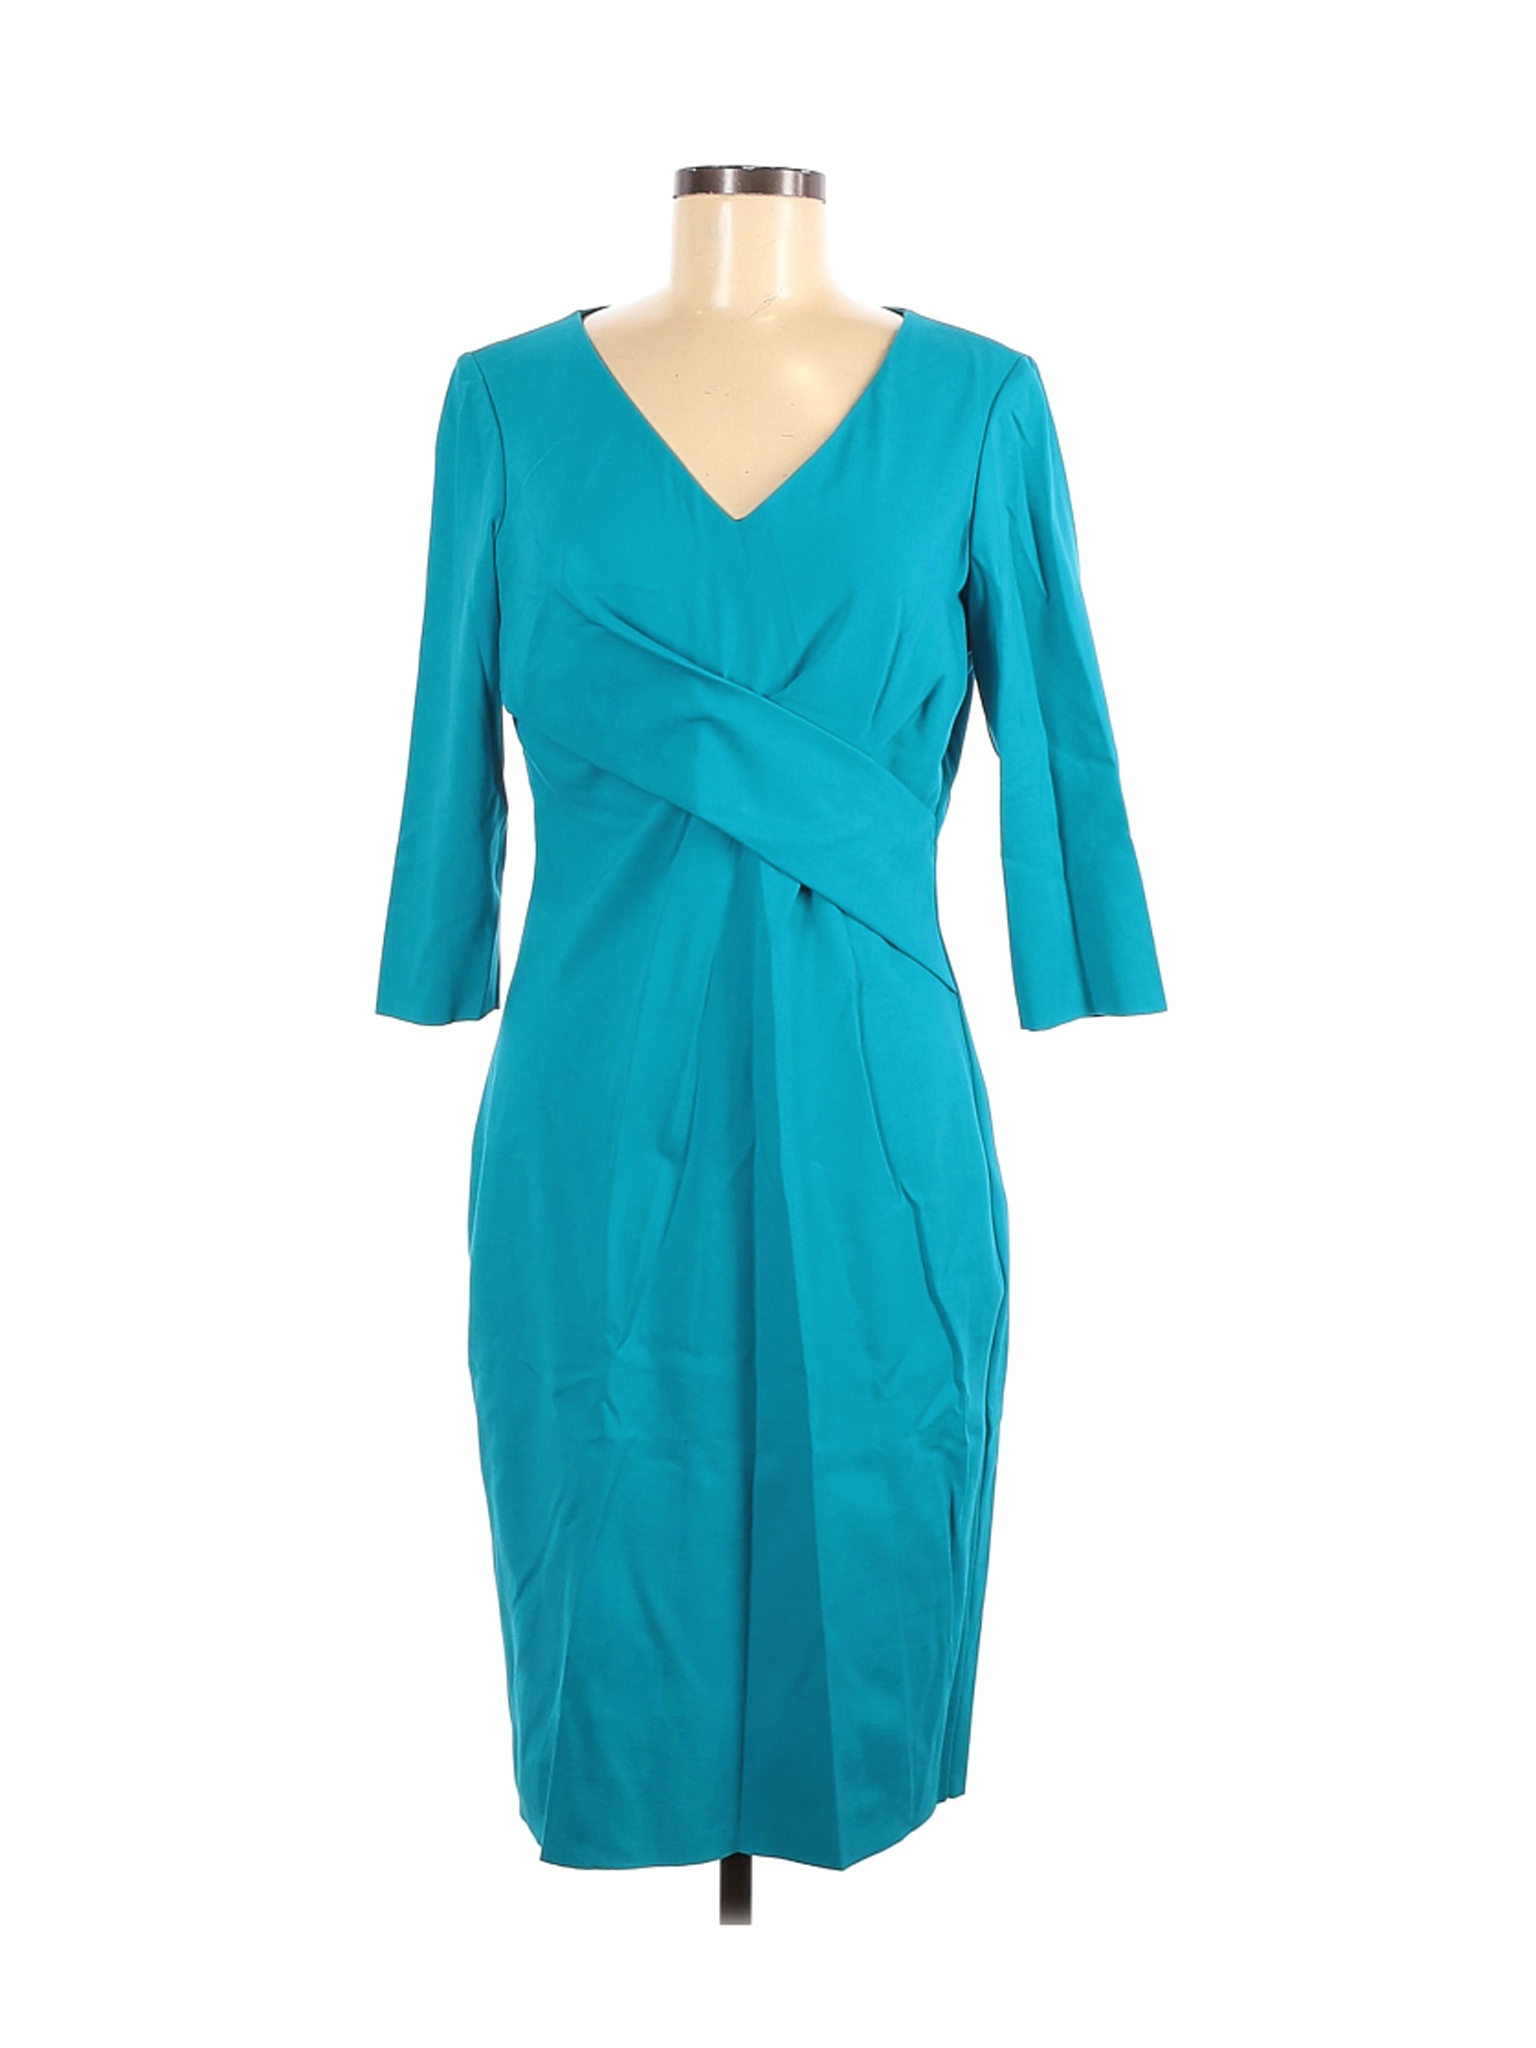 NWT Elie Tahari Women Green Casual Dress 10 | eBay